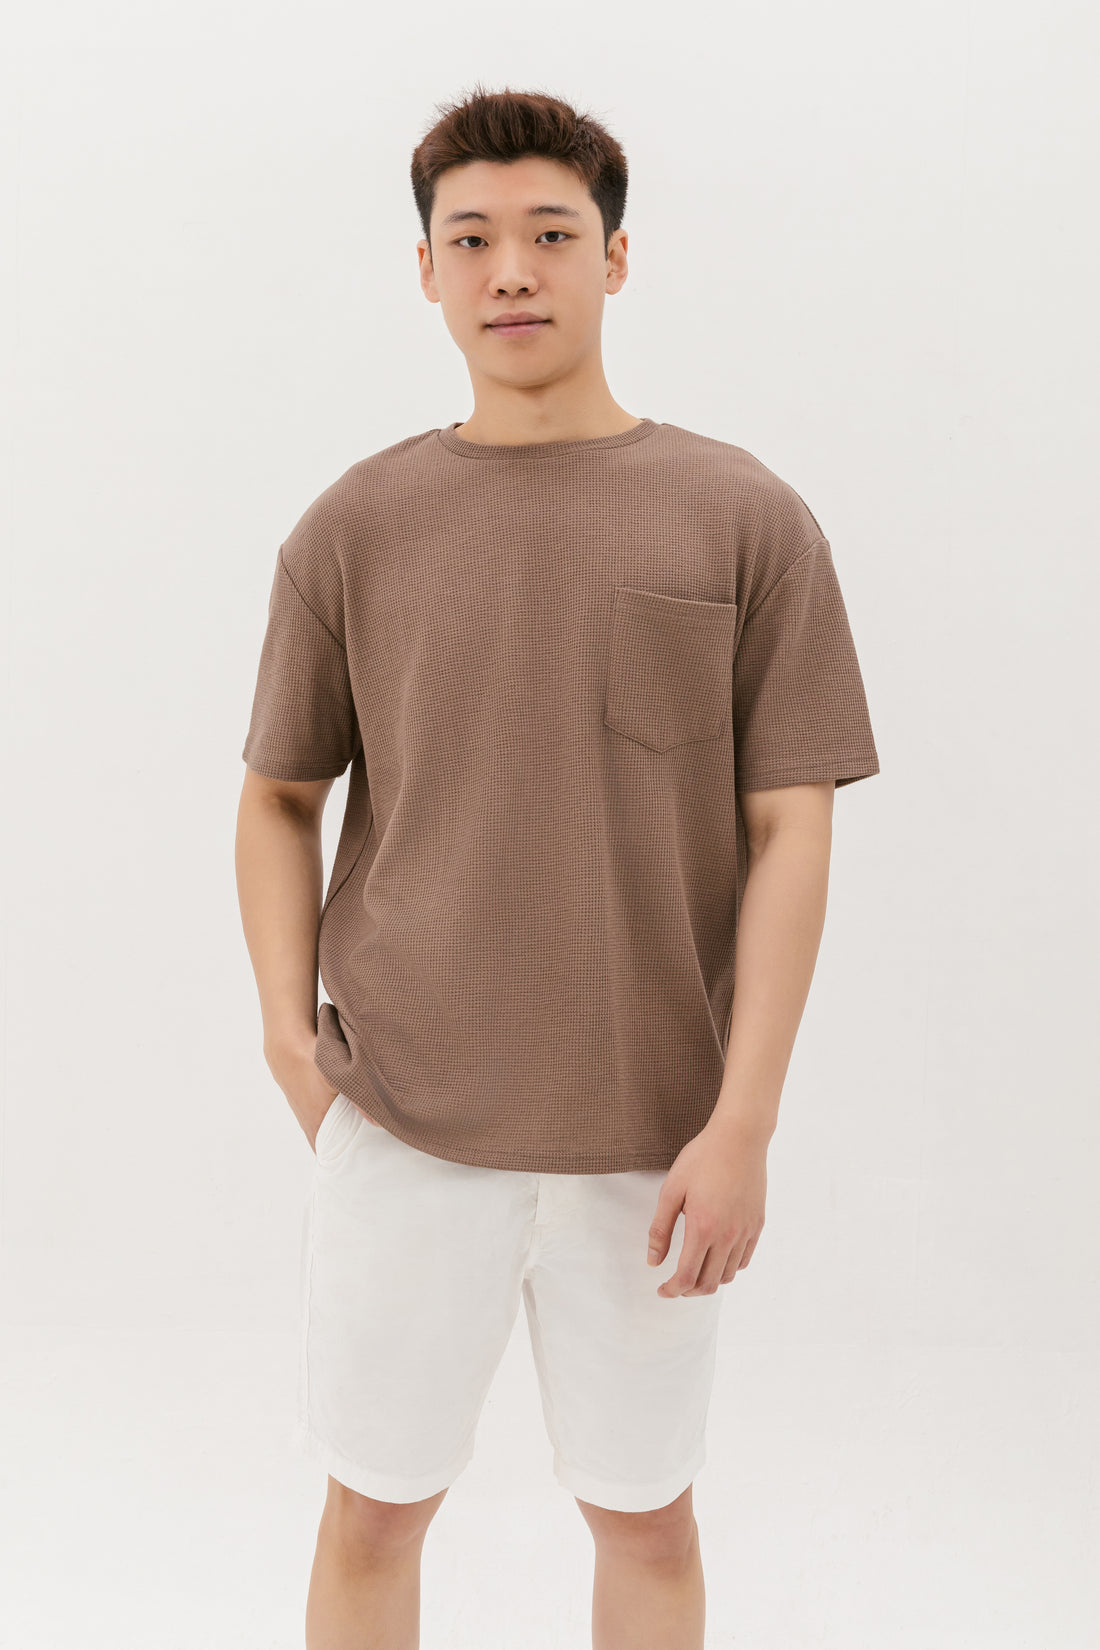 Kane Waffle Knit Pocket T-Shirt In Light Brown